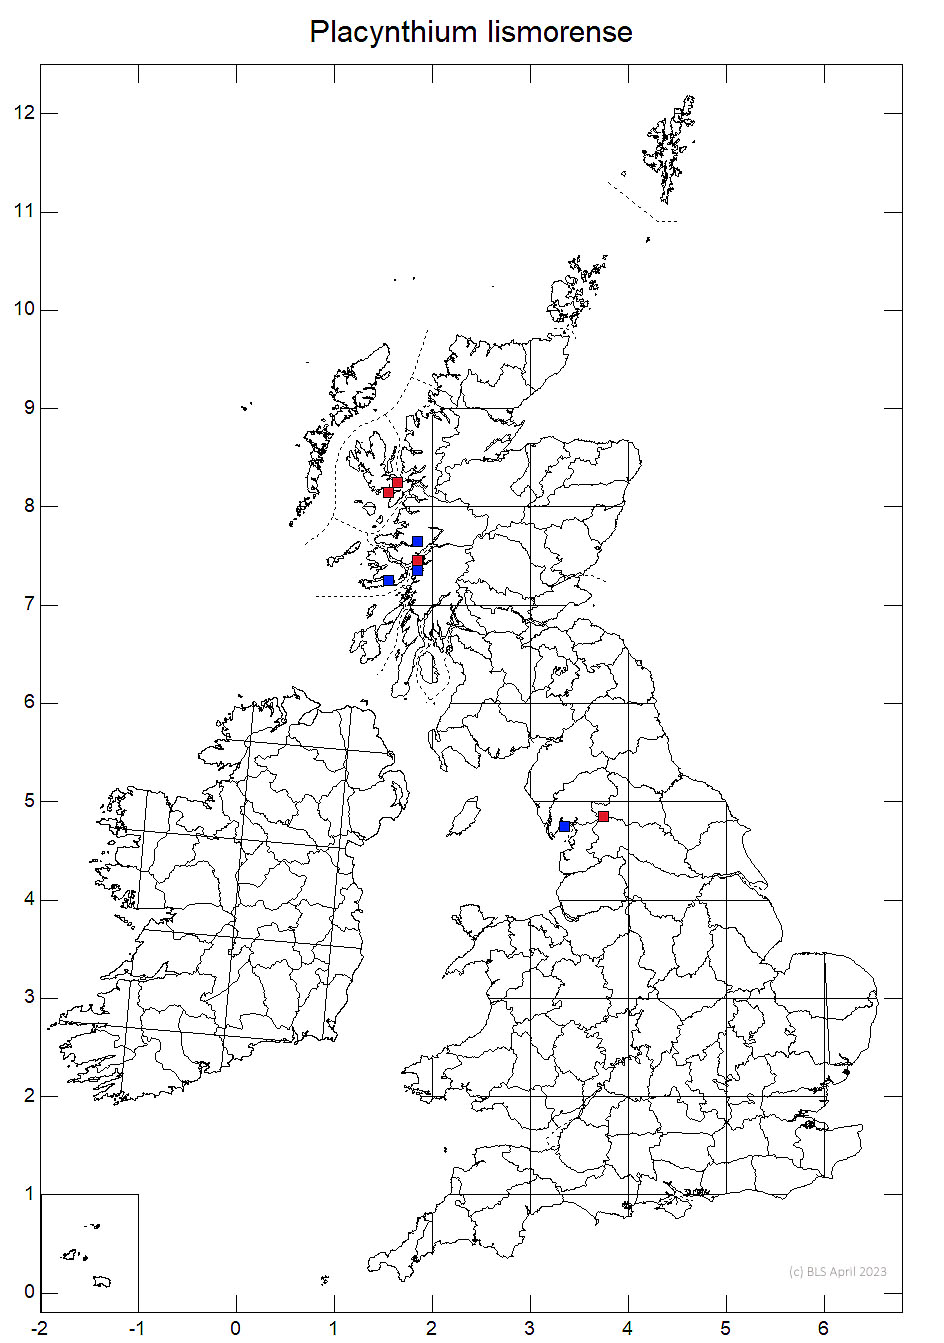 Placynthium lismorense 10km sq distribution map